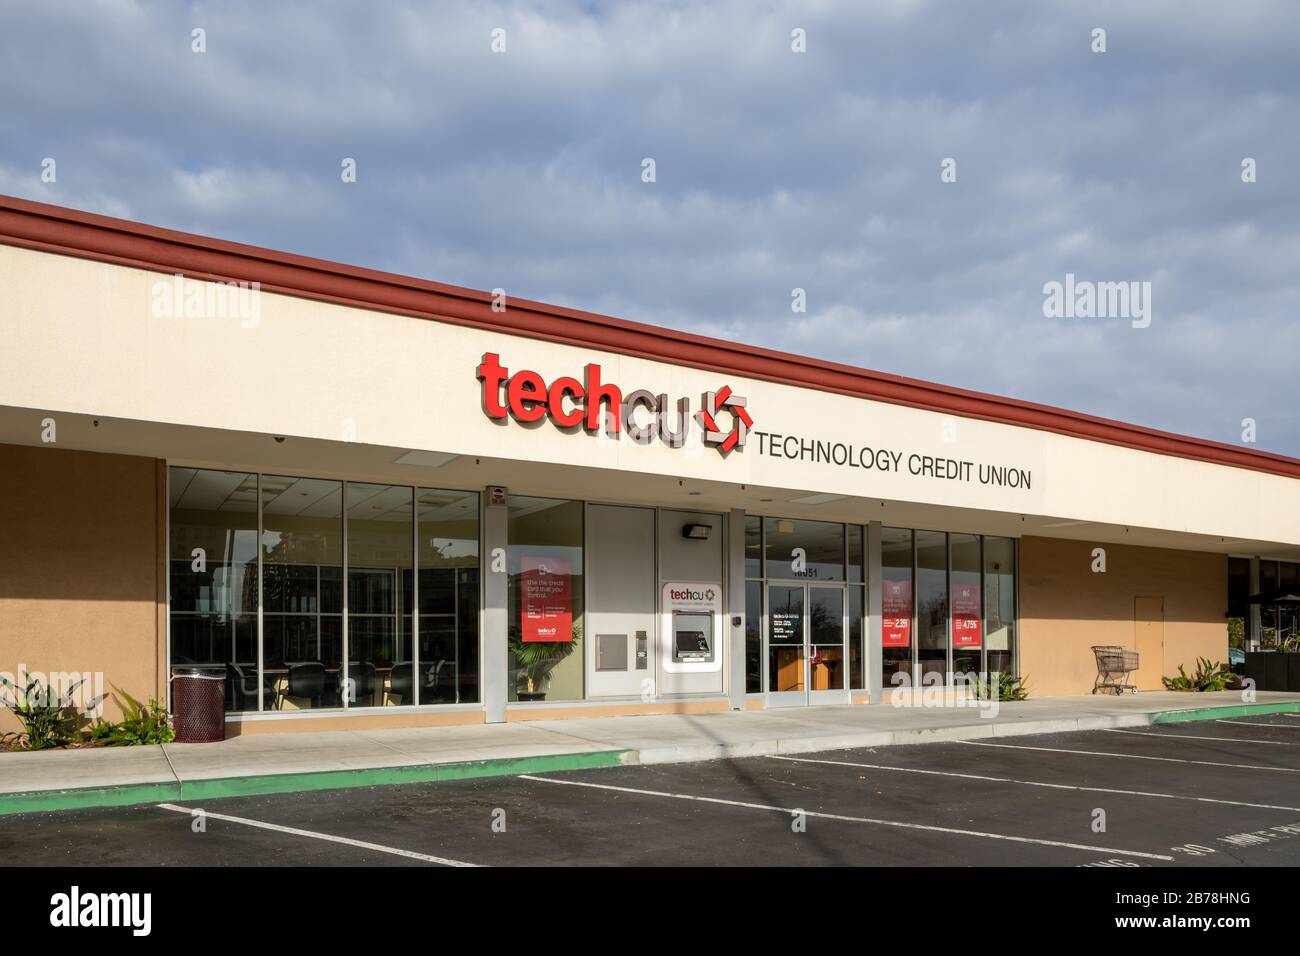 Tech CU – Technology Credit Union, Cupertino, California, USA Stock Photo